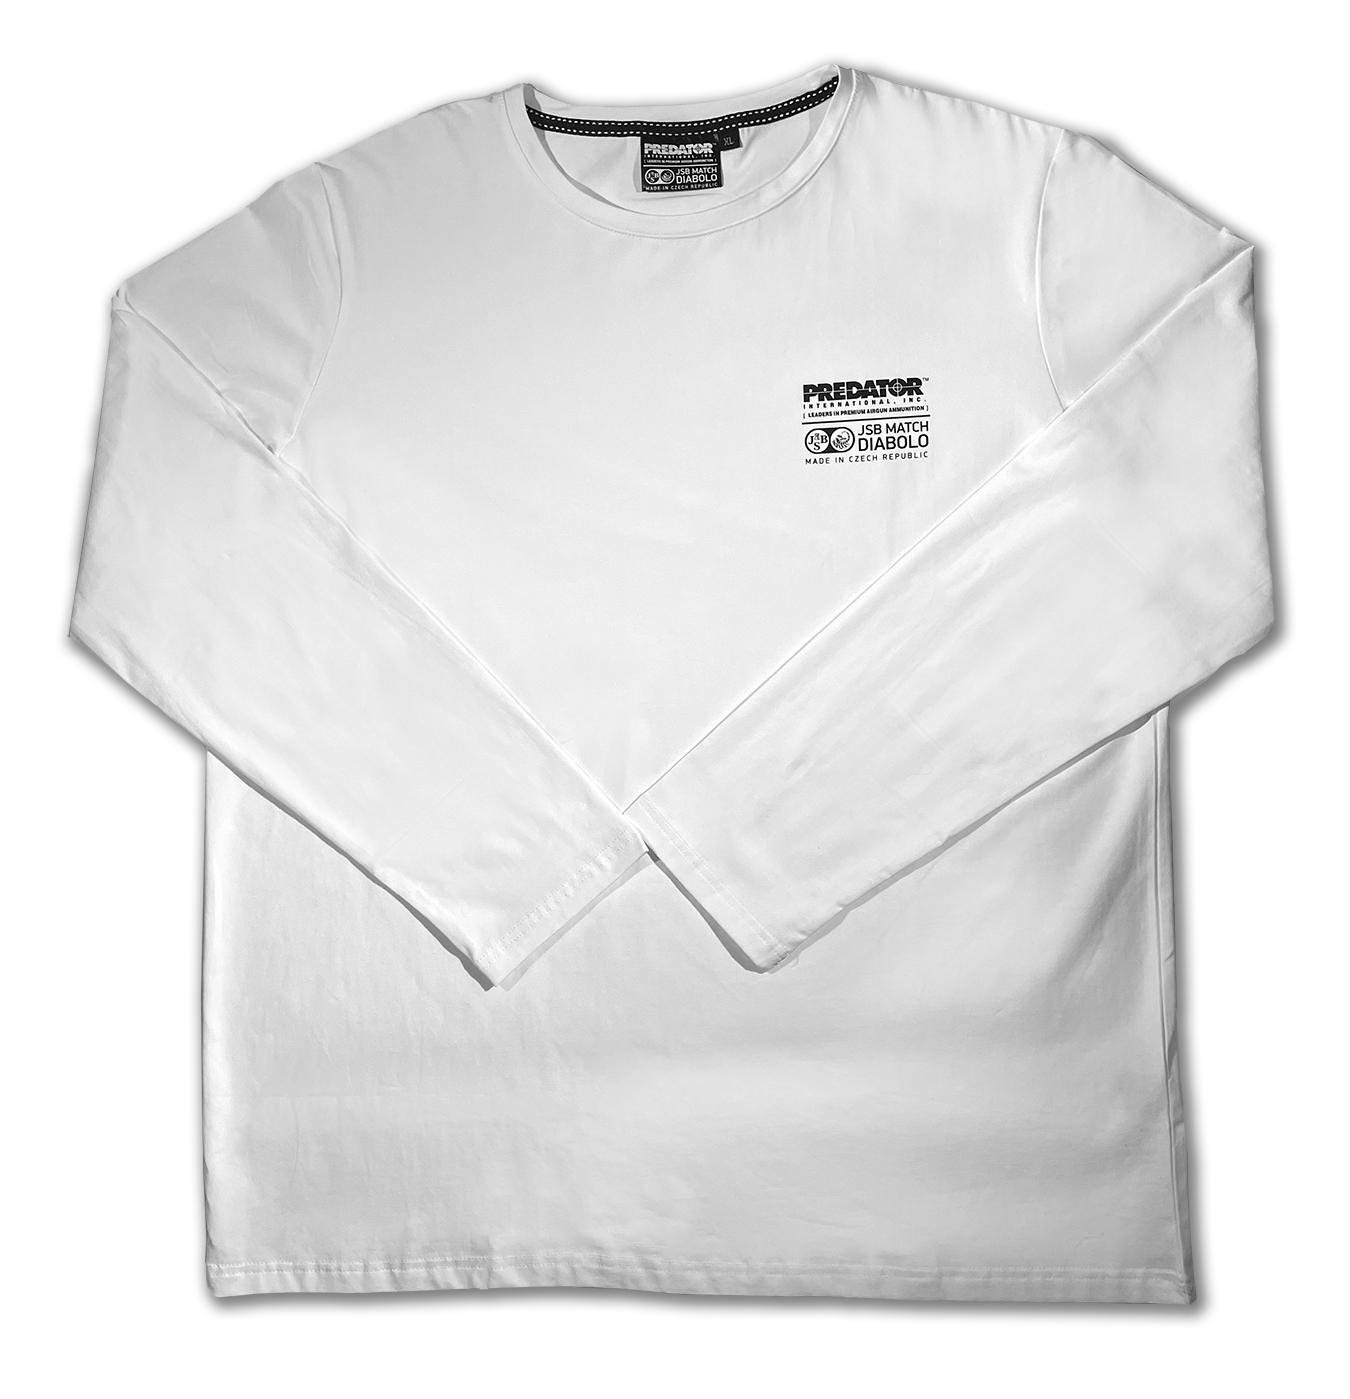 JSB Predator Long Sleeve Cotton/Spandex T-Shirt, White, Medium